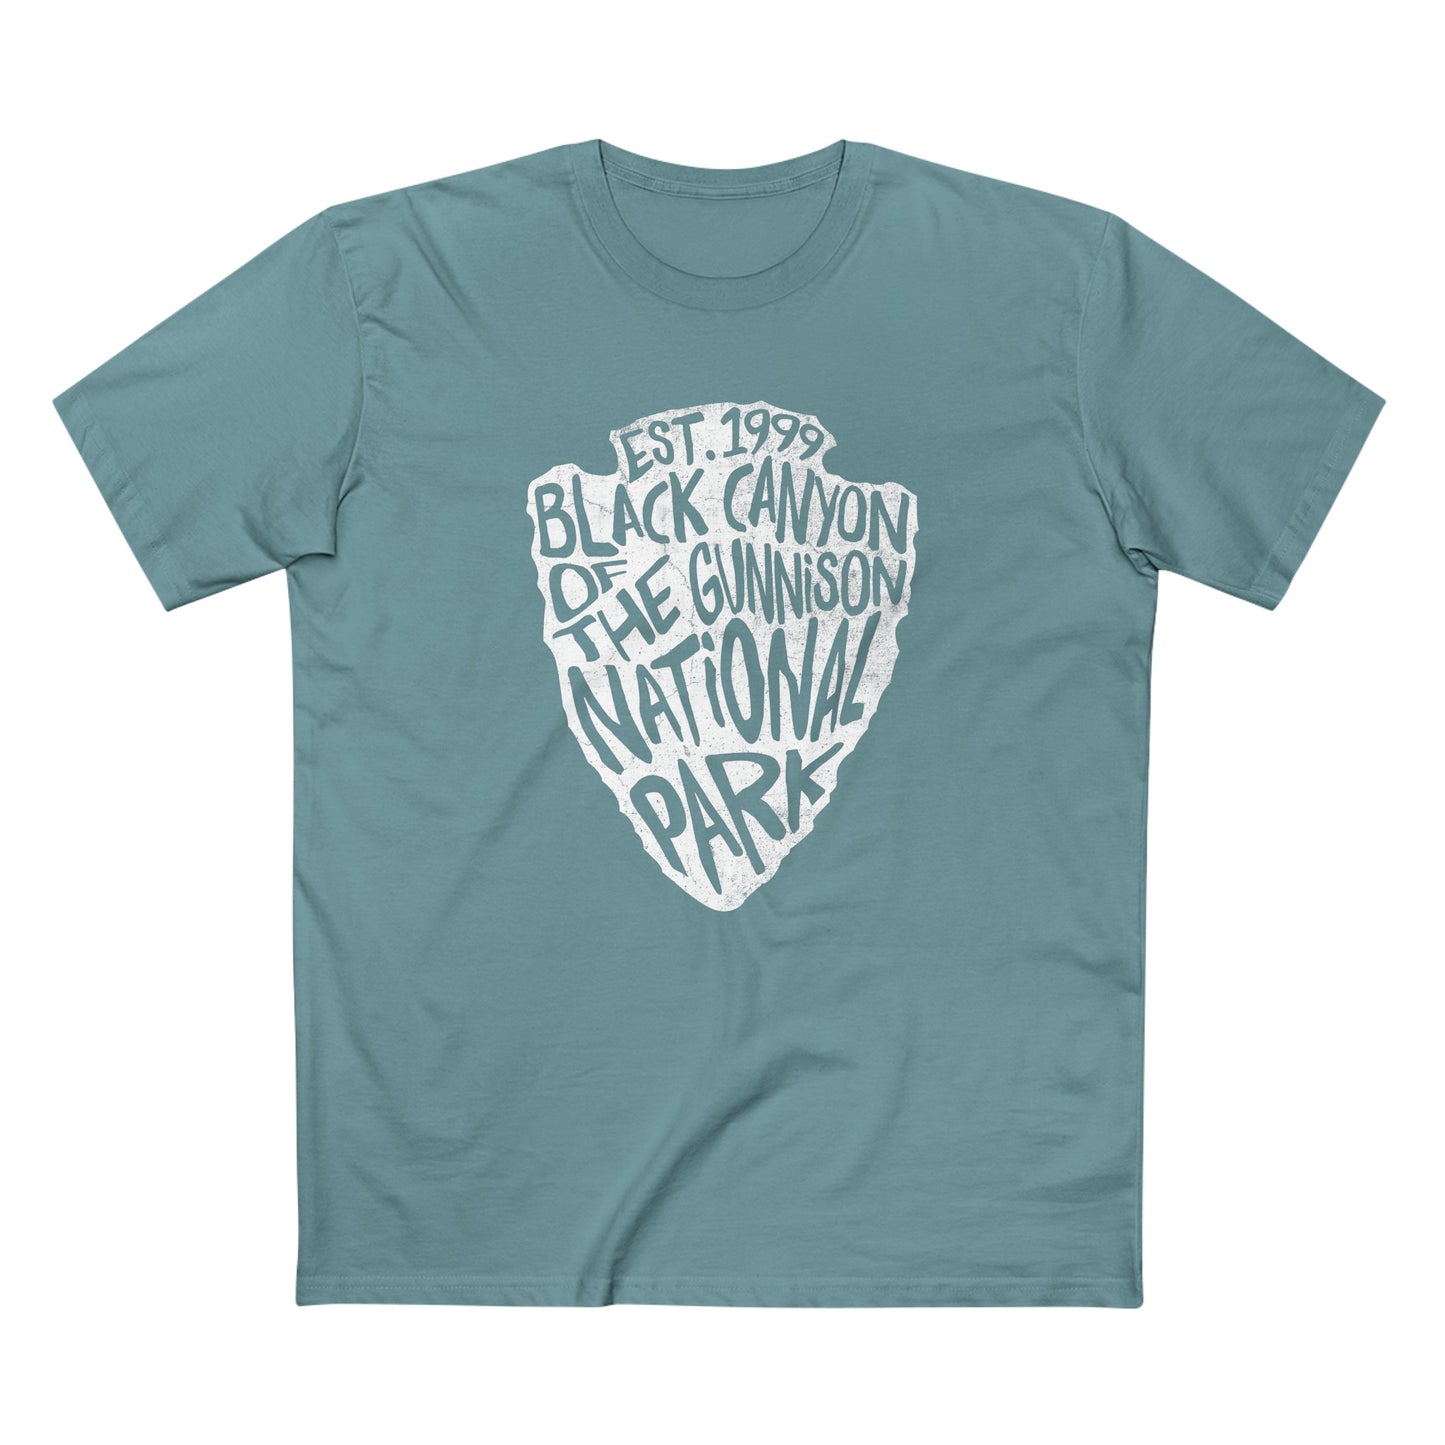 Black Canyon of the Gunnison National Park T-Shirt - Arrowhead Design